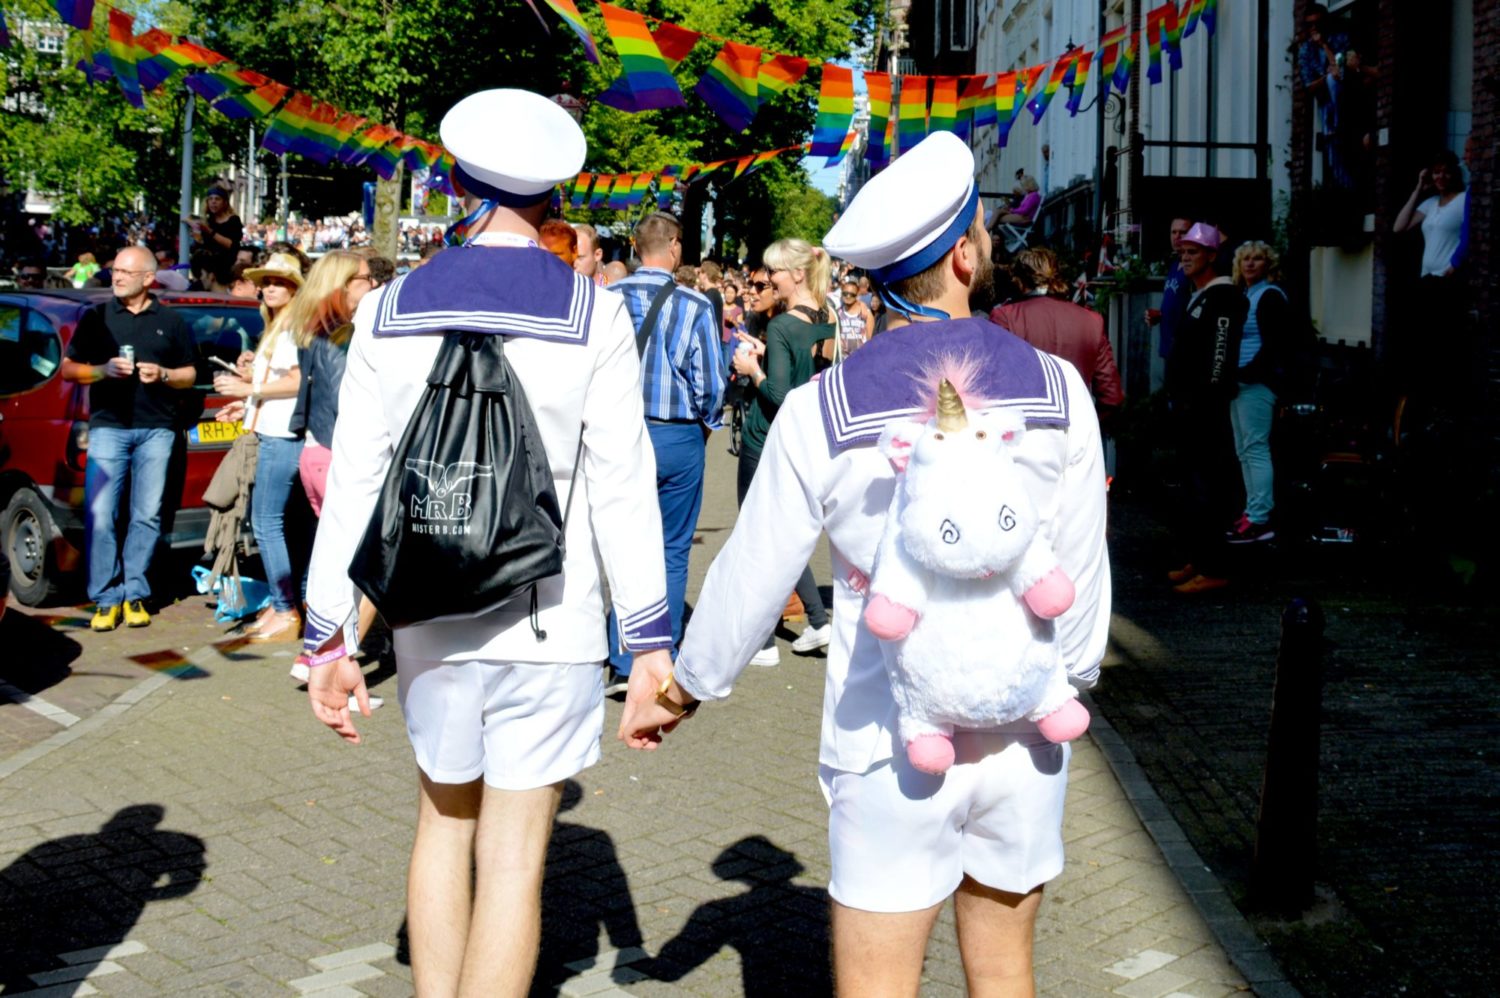 Strong Photos of the Gay Euro Pride Amsterdam 2016